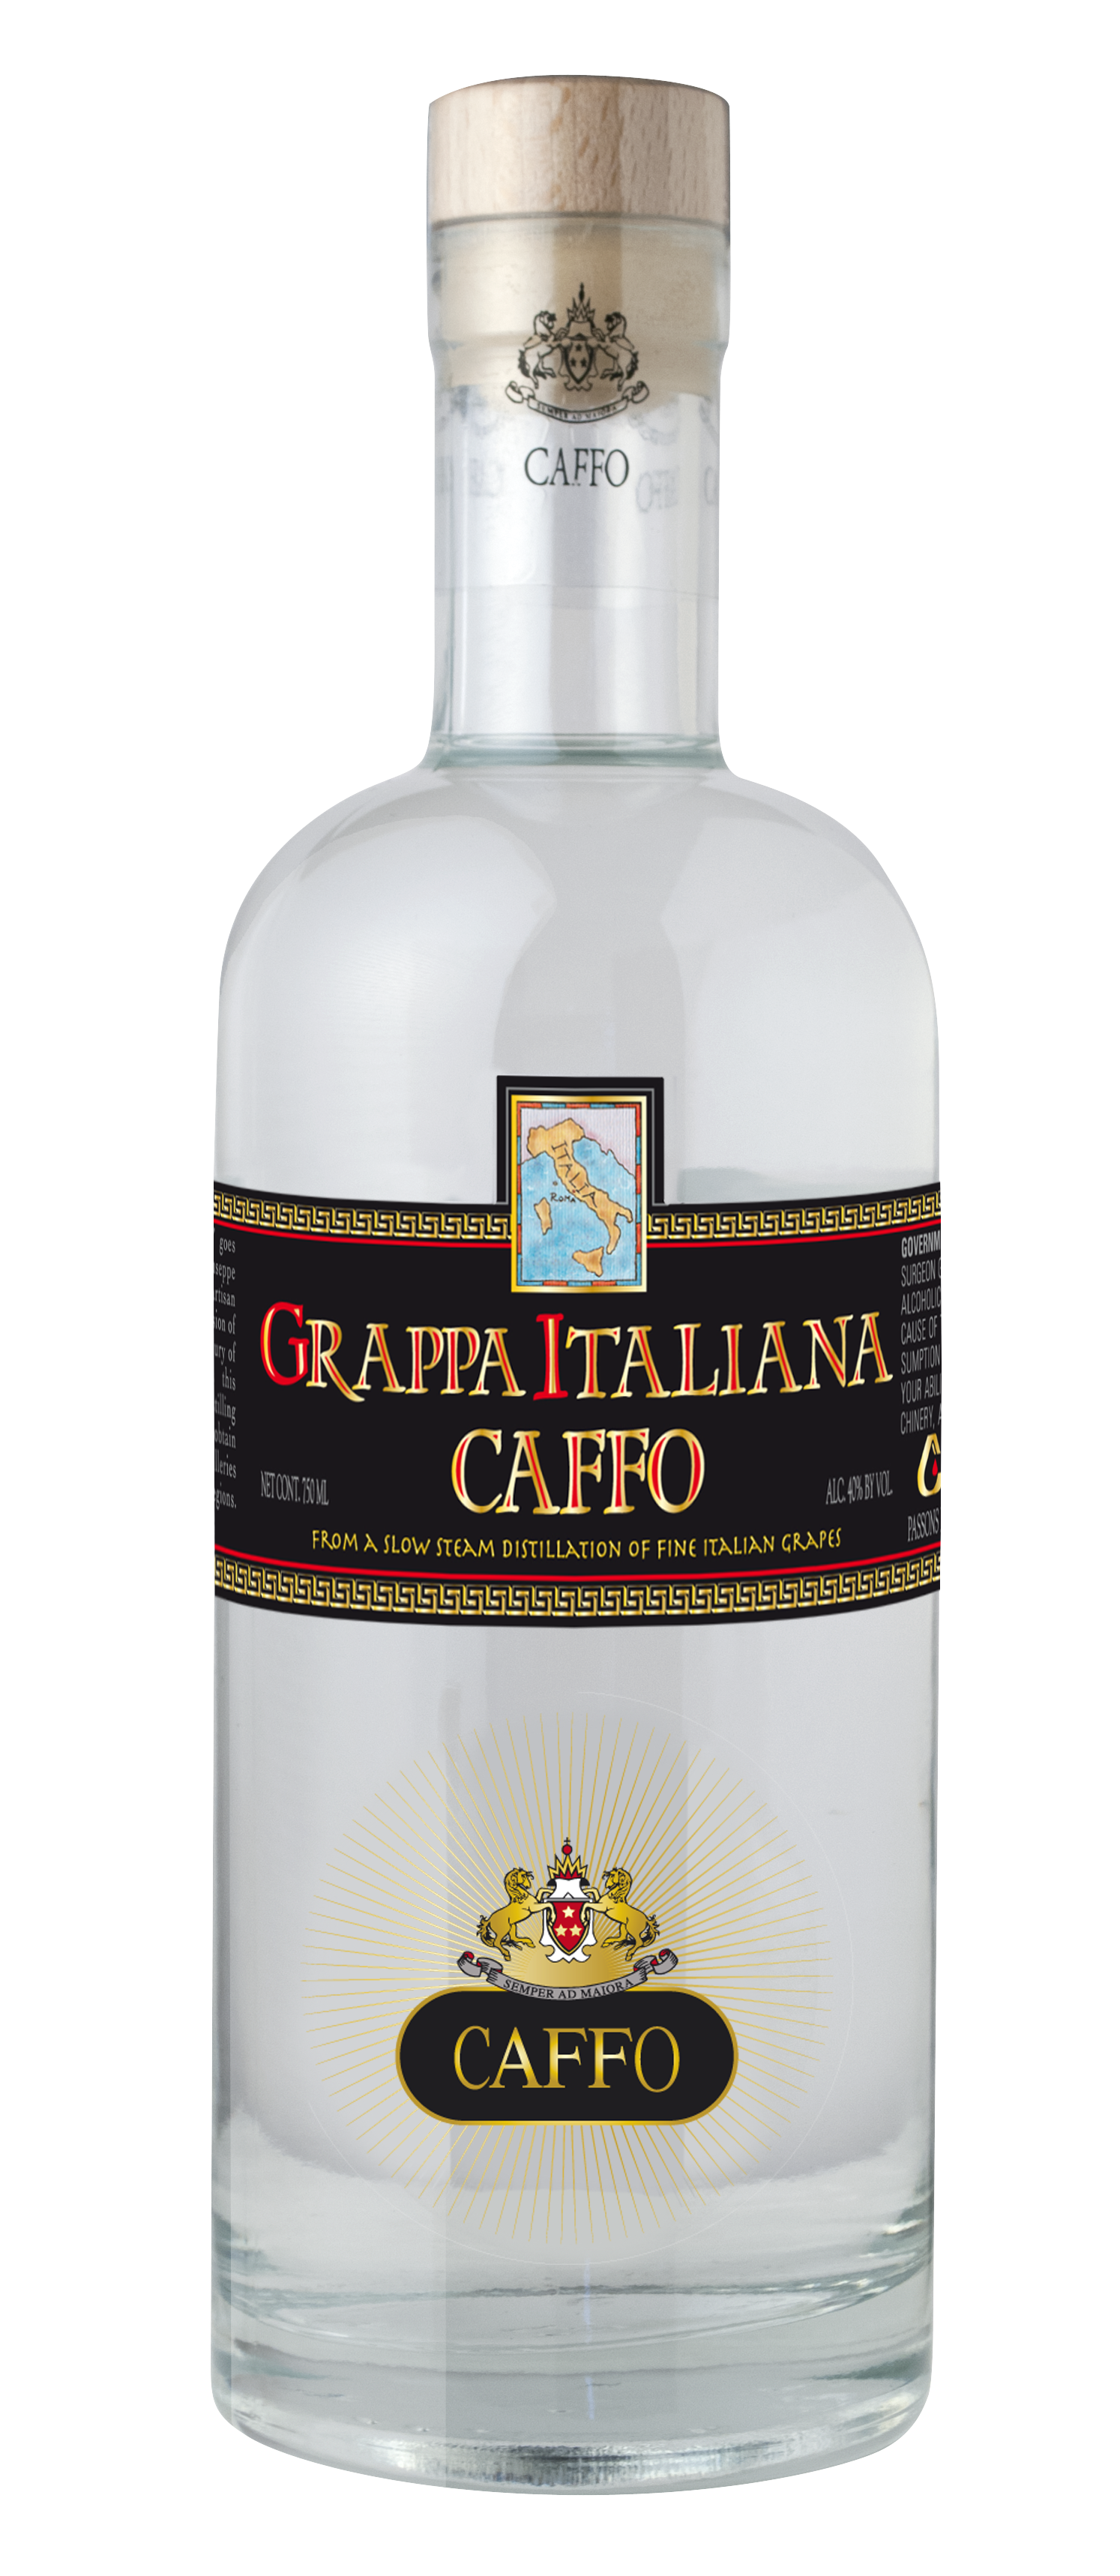 Grappa Italiana, Caffo - Skurnik Wines & Spirits